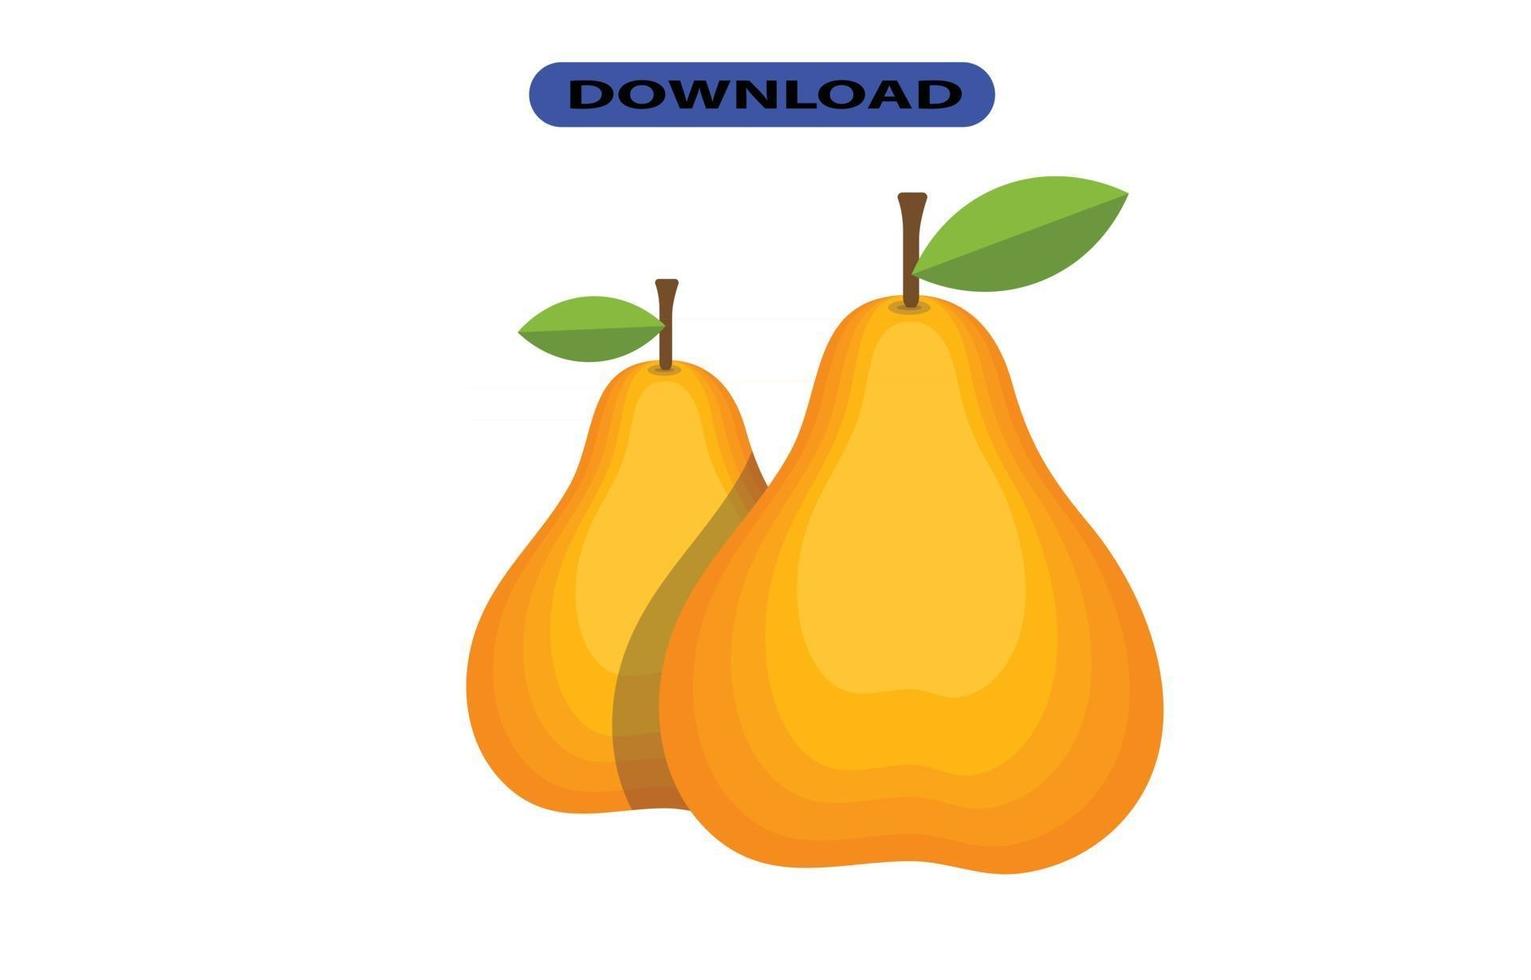 peach icon or logo high resolution vector